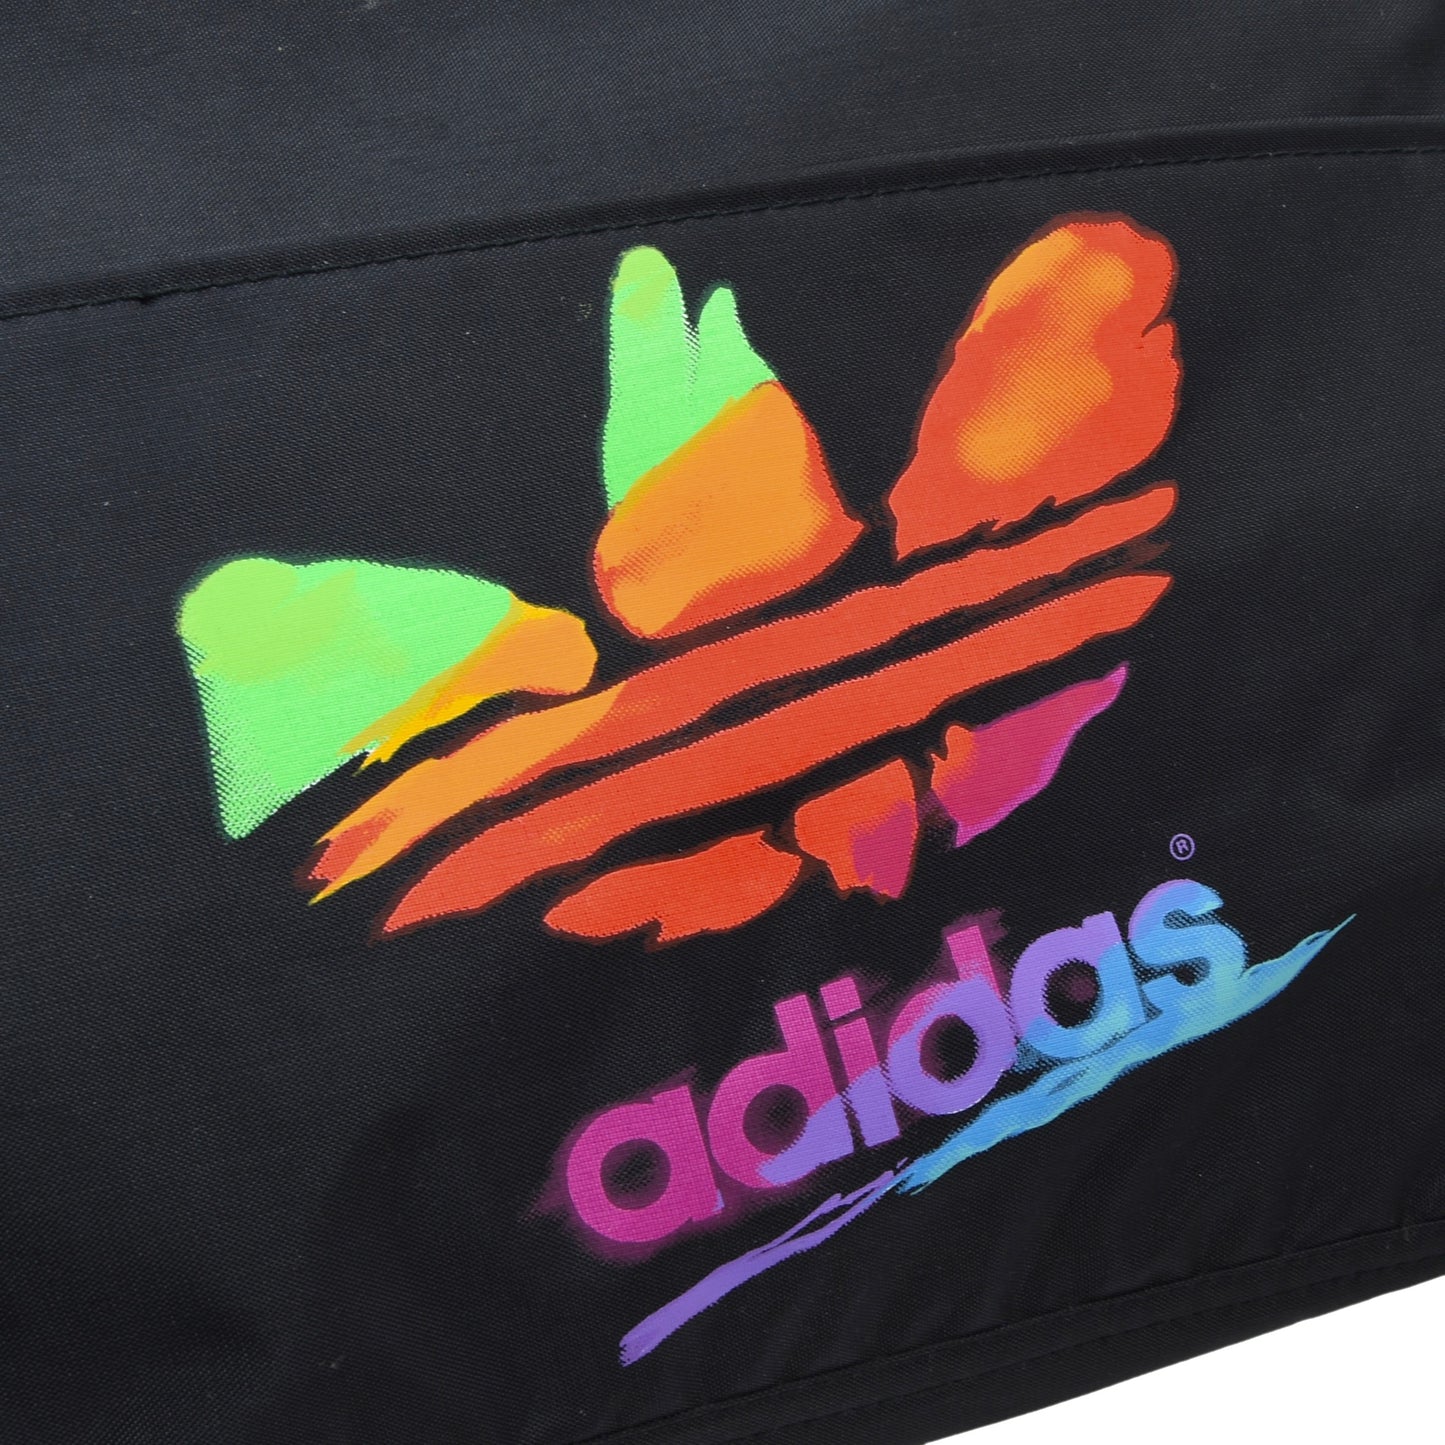 Vintage Adidas Nylon Gym Bag Art. No. 41230 Colours of Sport - Black